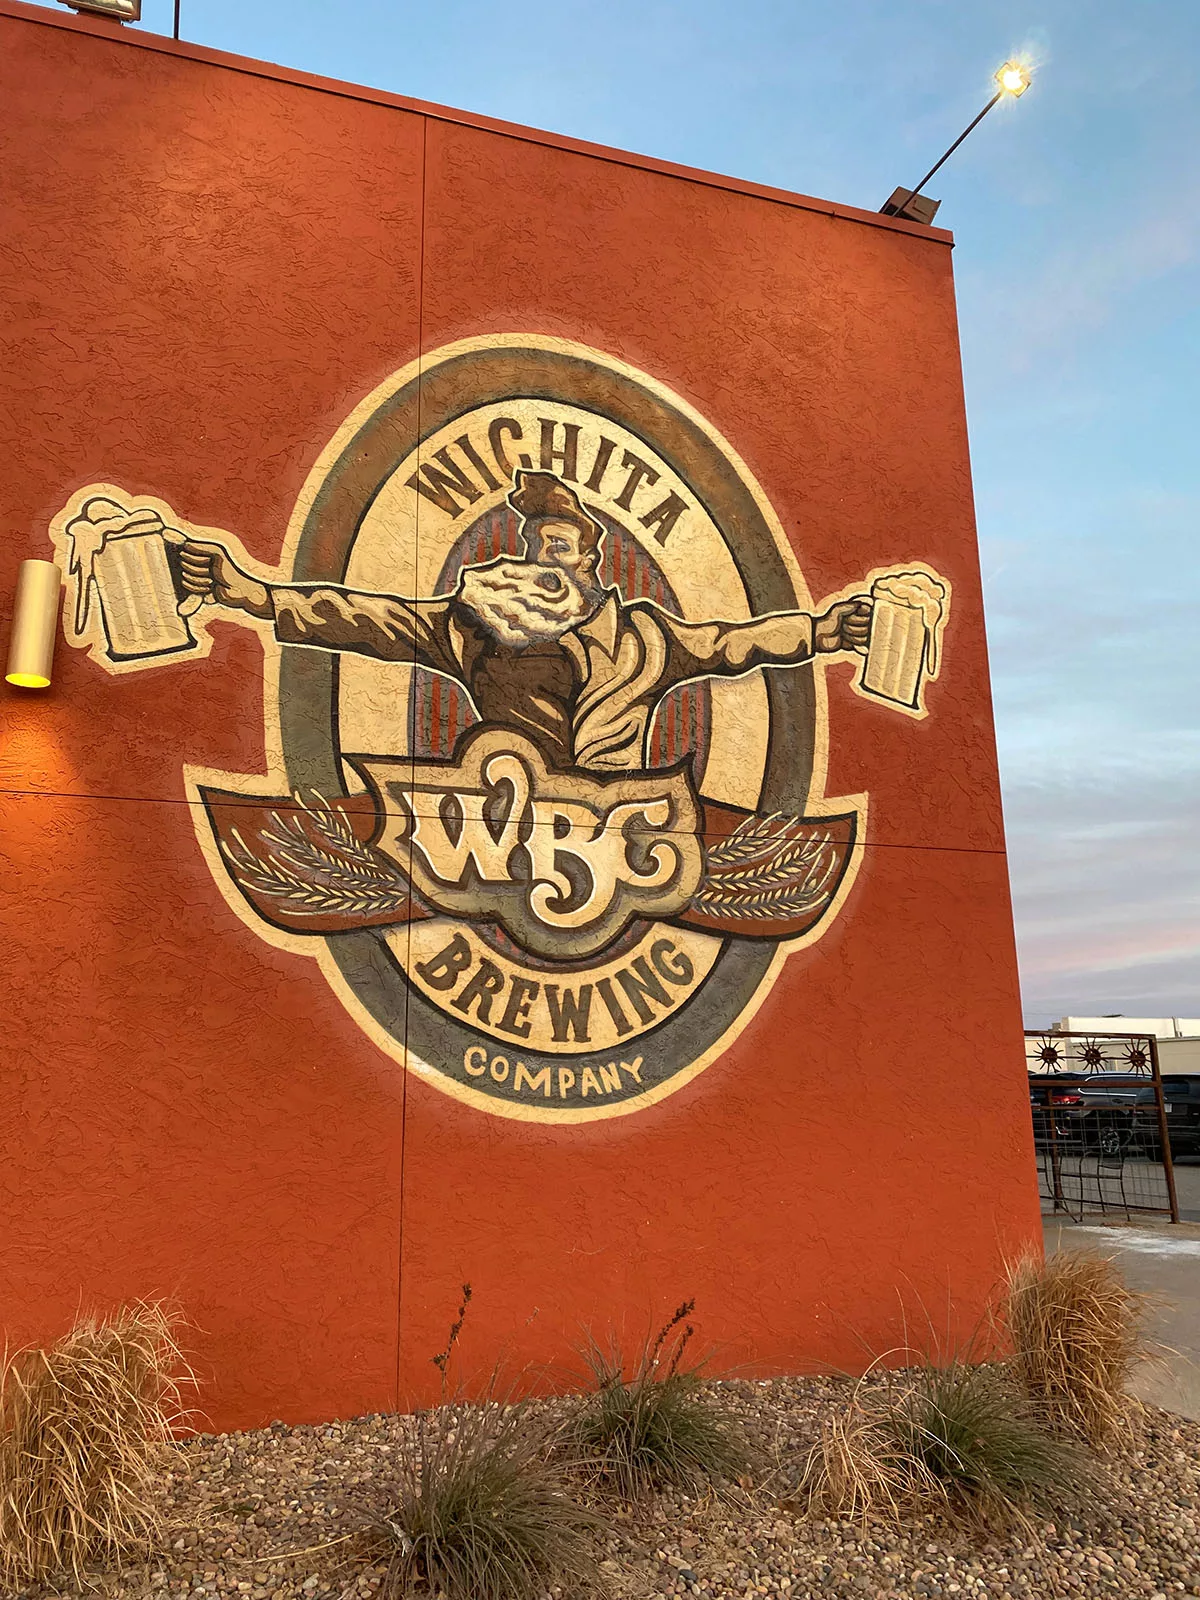 Mural outside of Wichita Brewing Company in Wichita, Kansas